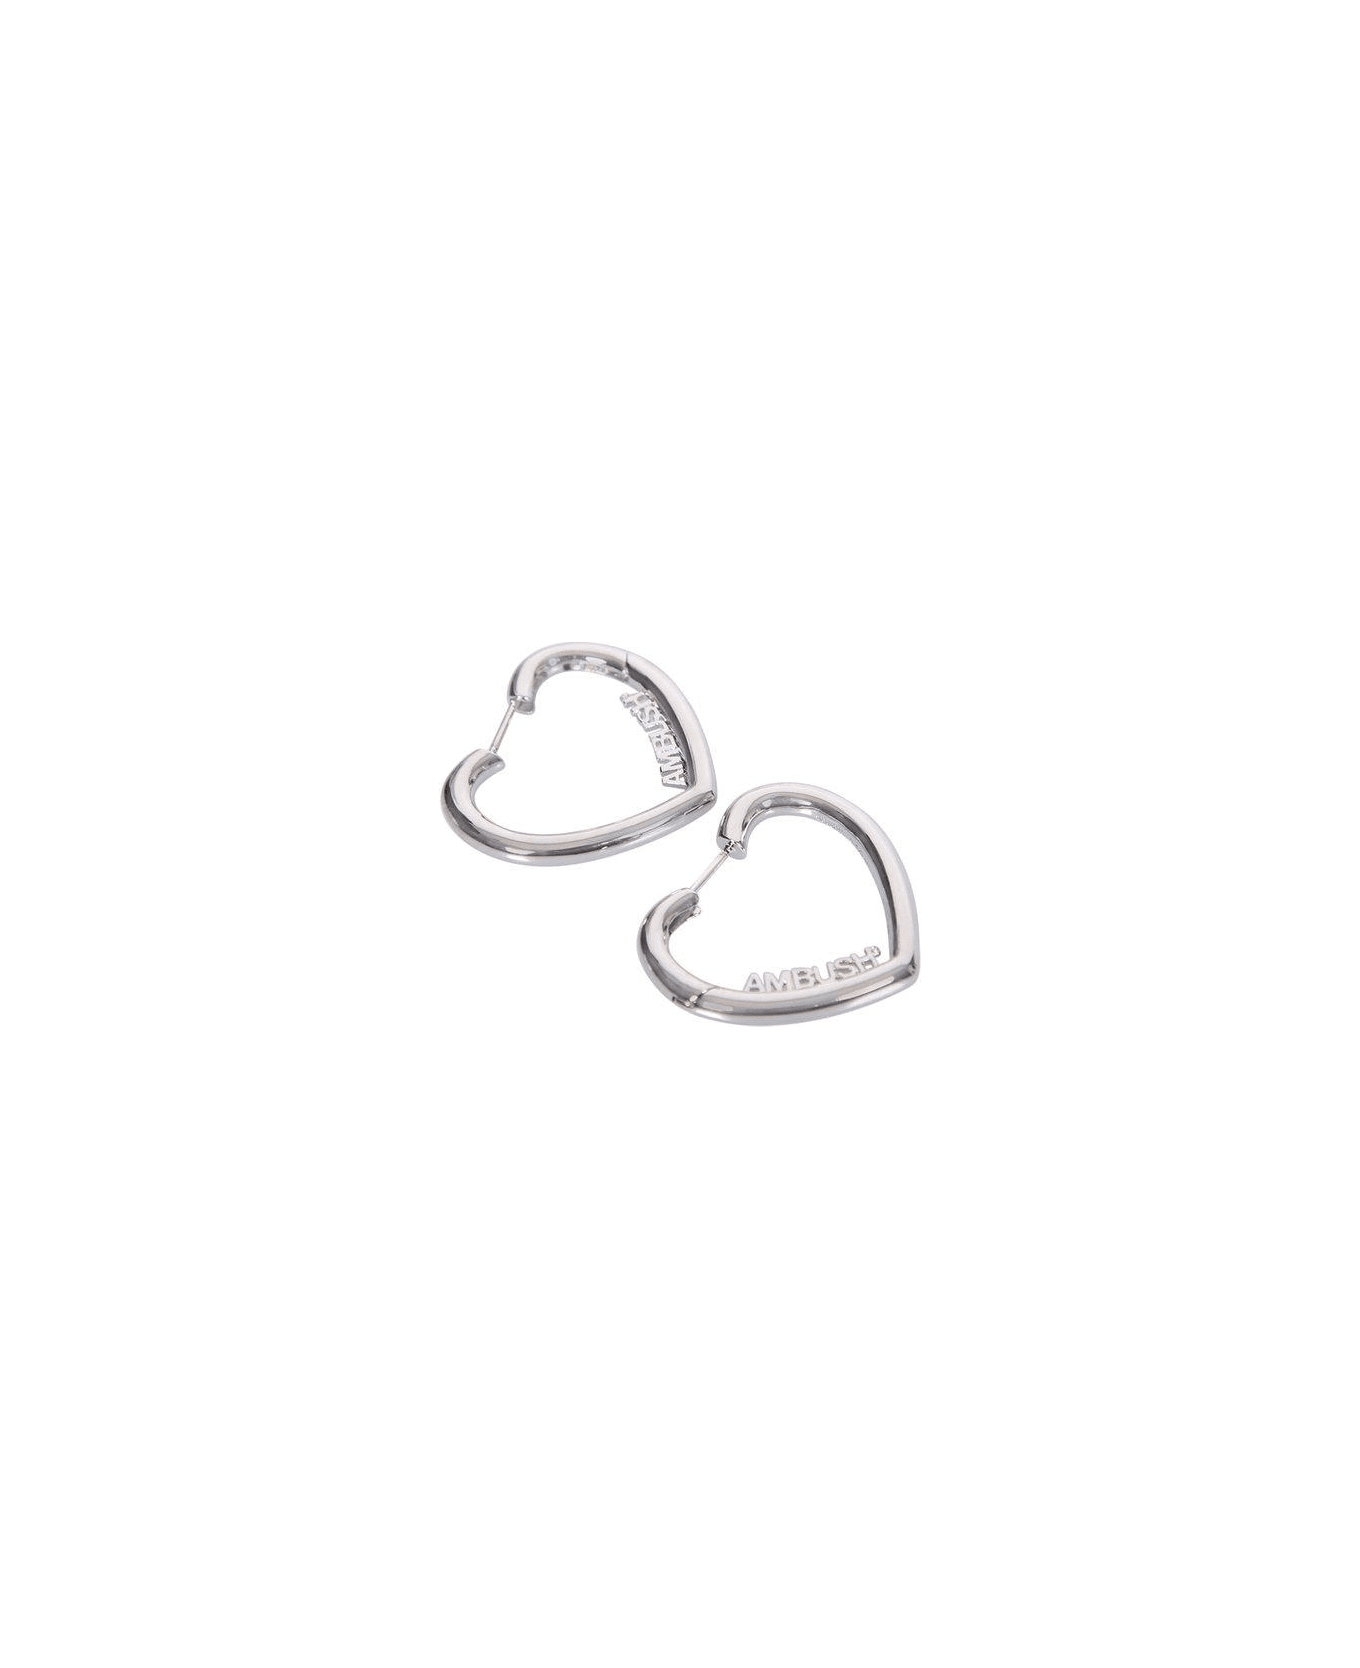 AMBUSH Heart-shaped Earrings - Silver イヤリング